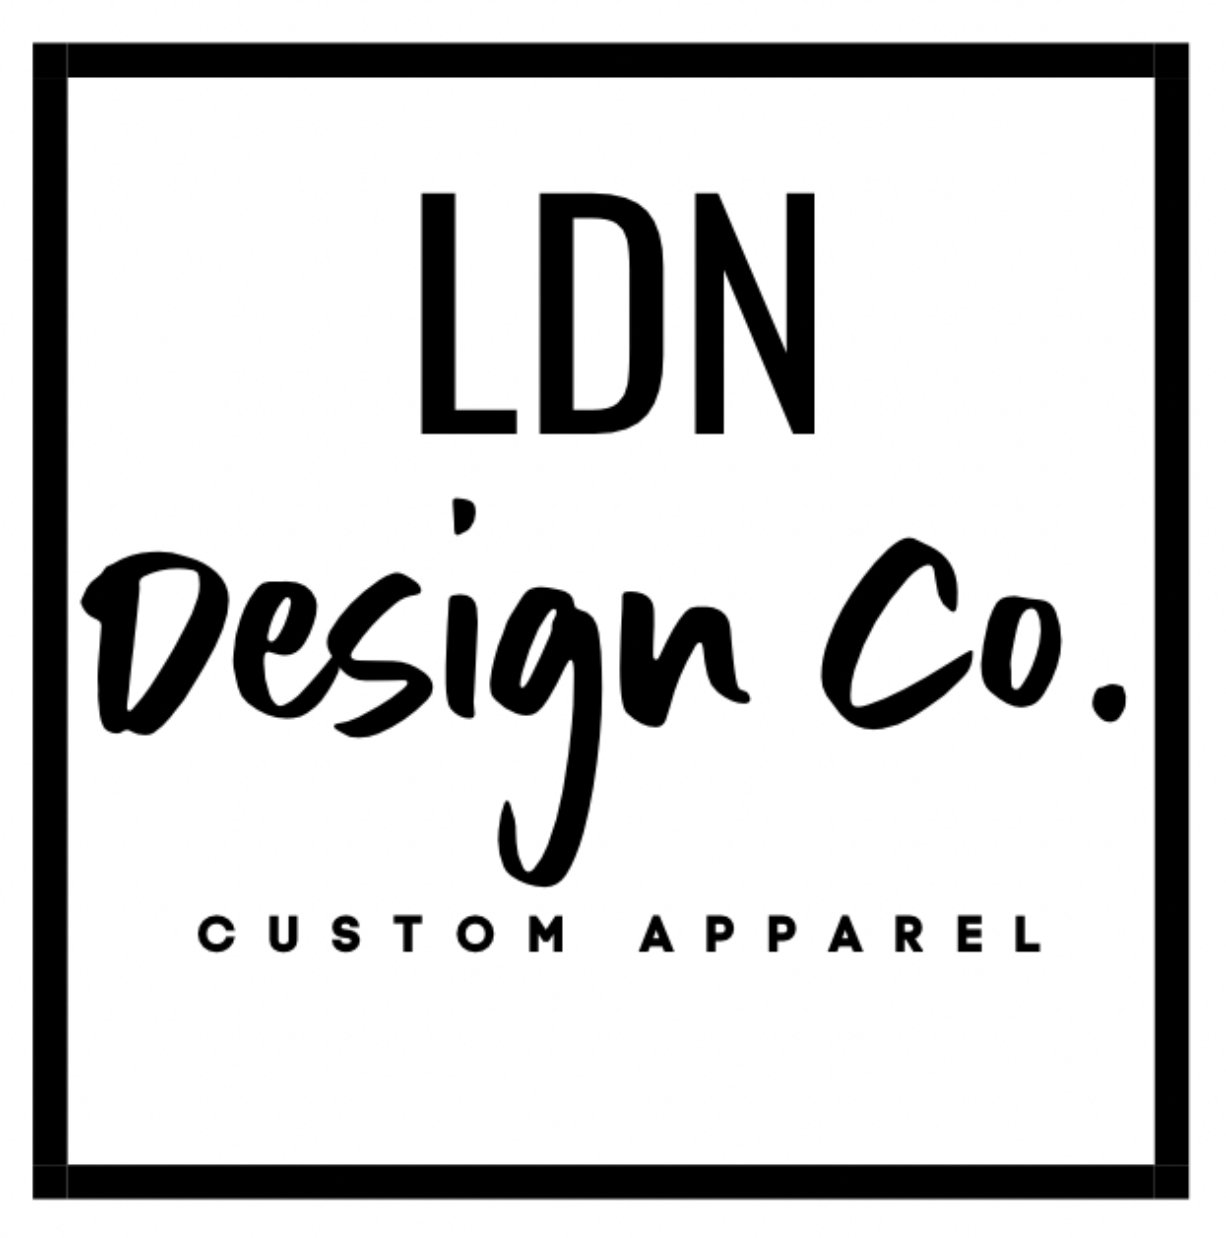 LDN Design Co.